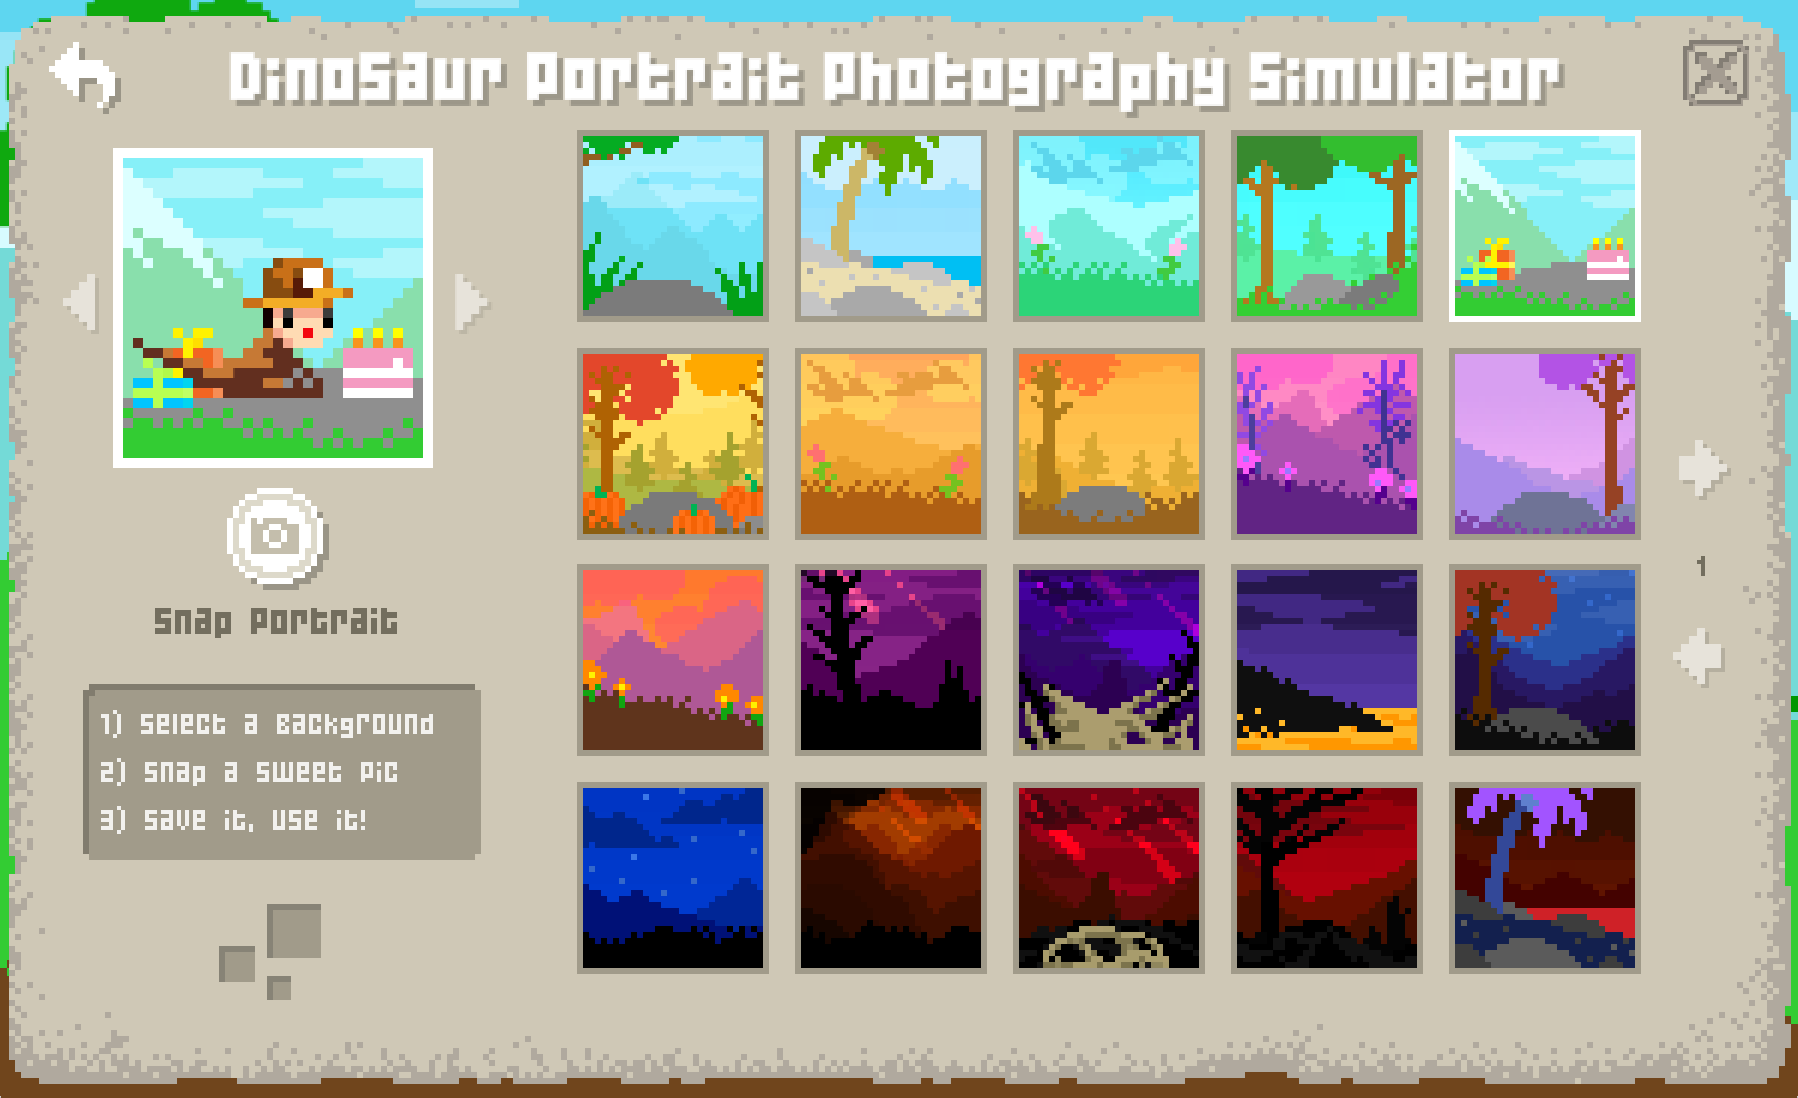 Steam :: Dino Run DX :: MAJOR UPDATE - Customization Explorer, Selfie  Maker, Trading Cards & Soundtrack